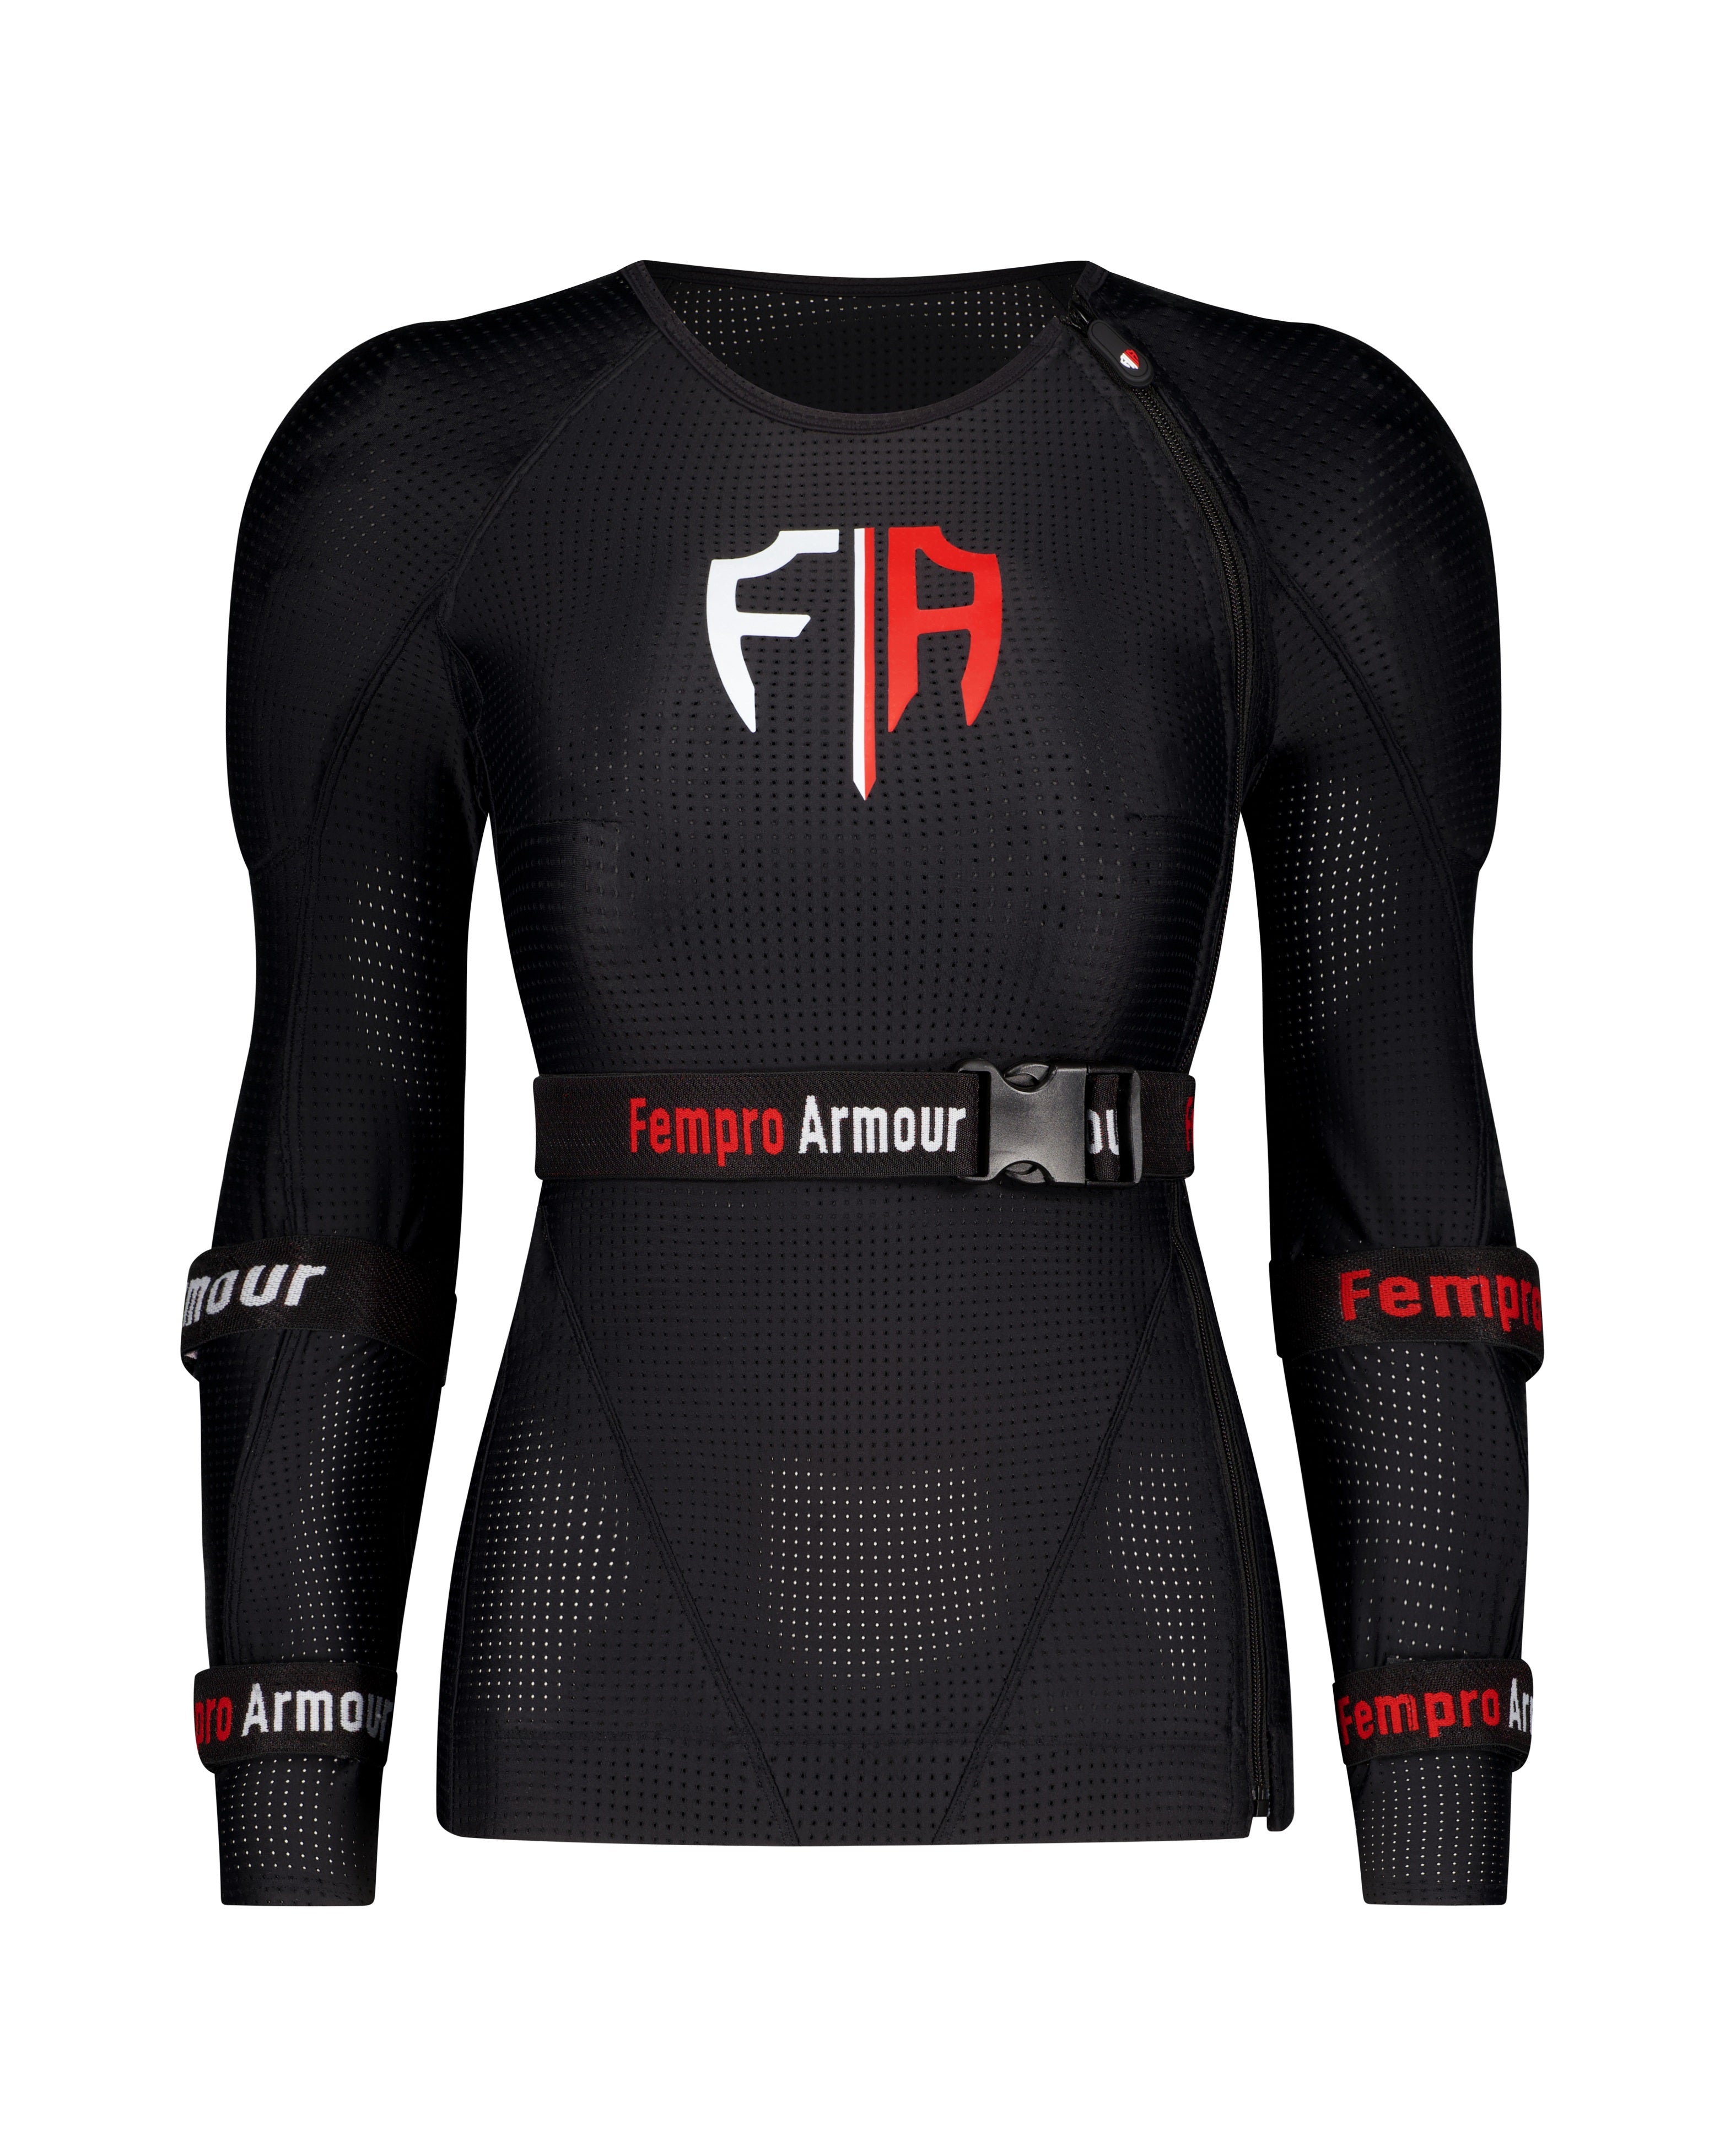 Fempro Armour - Undergarment Armour Jersey 1.1 - Summer Fabric